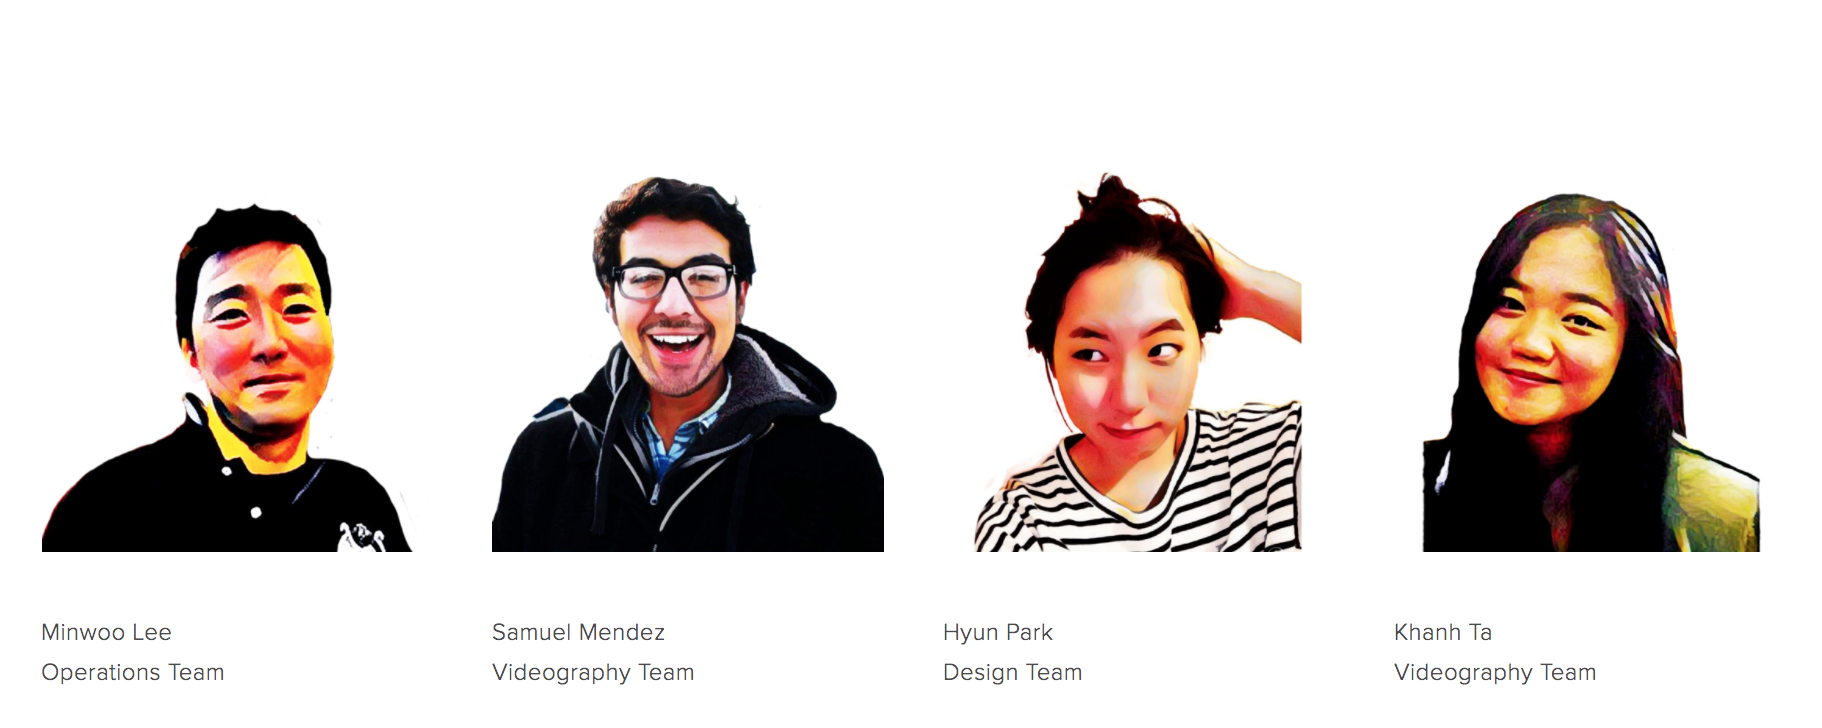  team members' photos are edited by  So Hyun Park  &amp;  Kun Ho Kim  